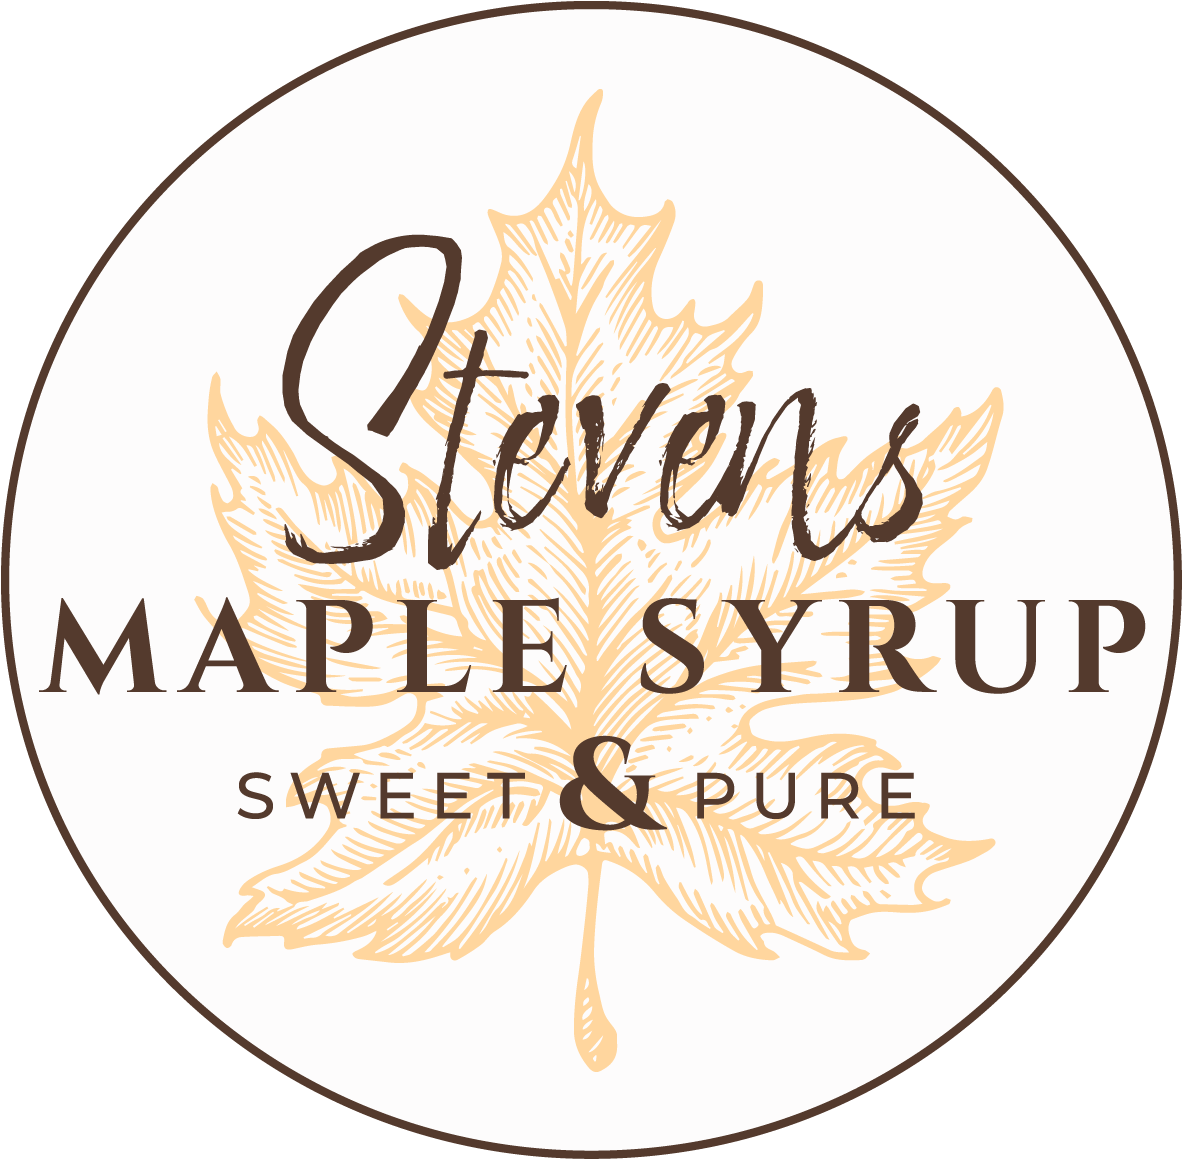 Stevens Maple Syrup